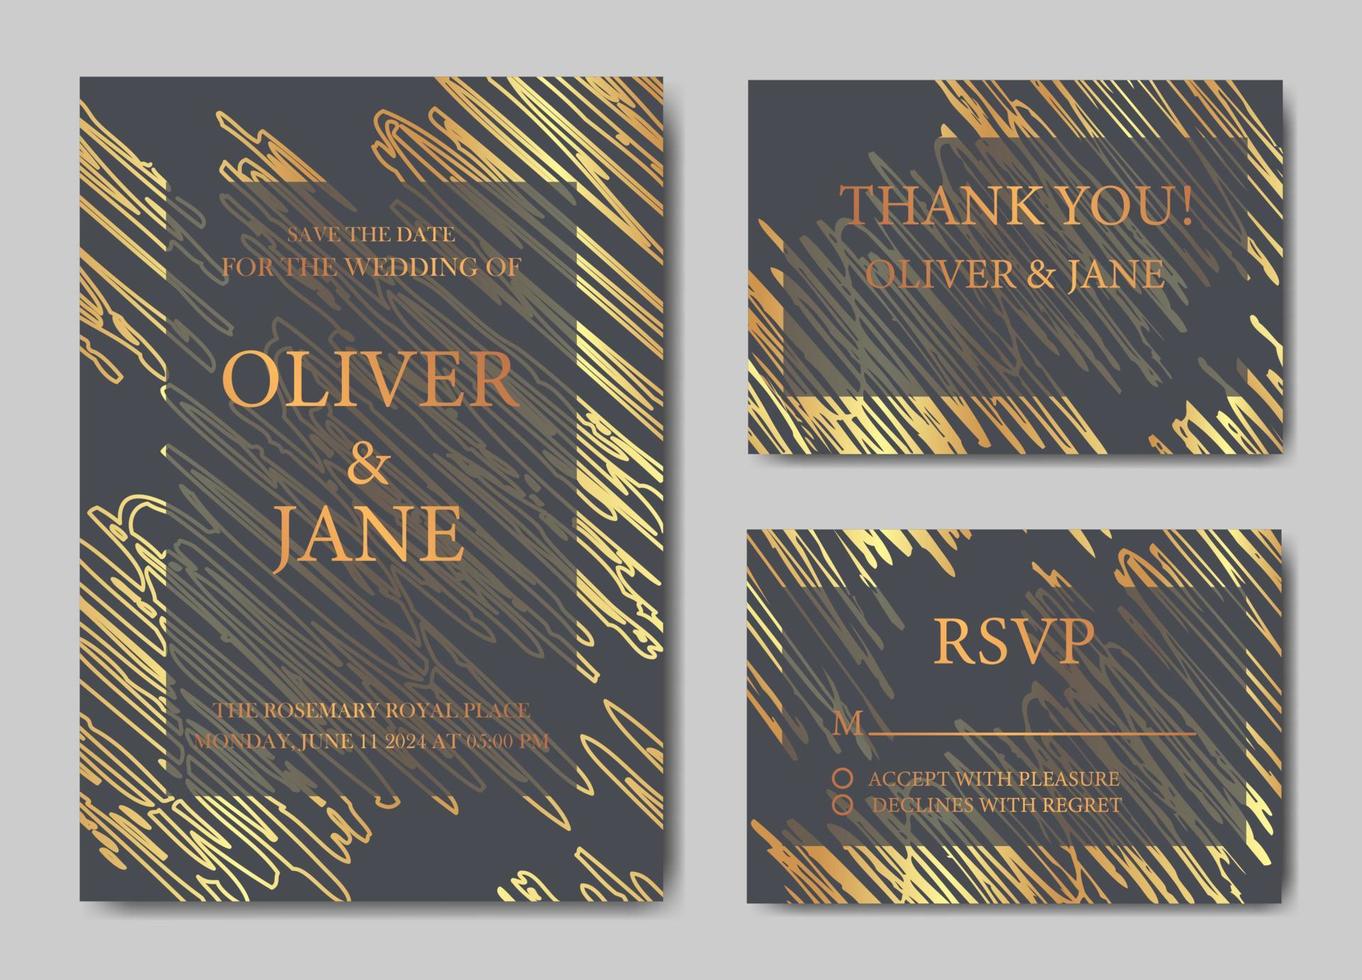 modelos de convite de casamento vintage. design da capa com folhas ornamentais de ouro. vector backgrounds decorativos tradicionais.